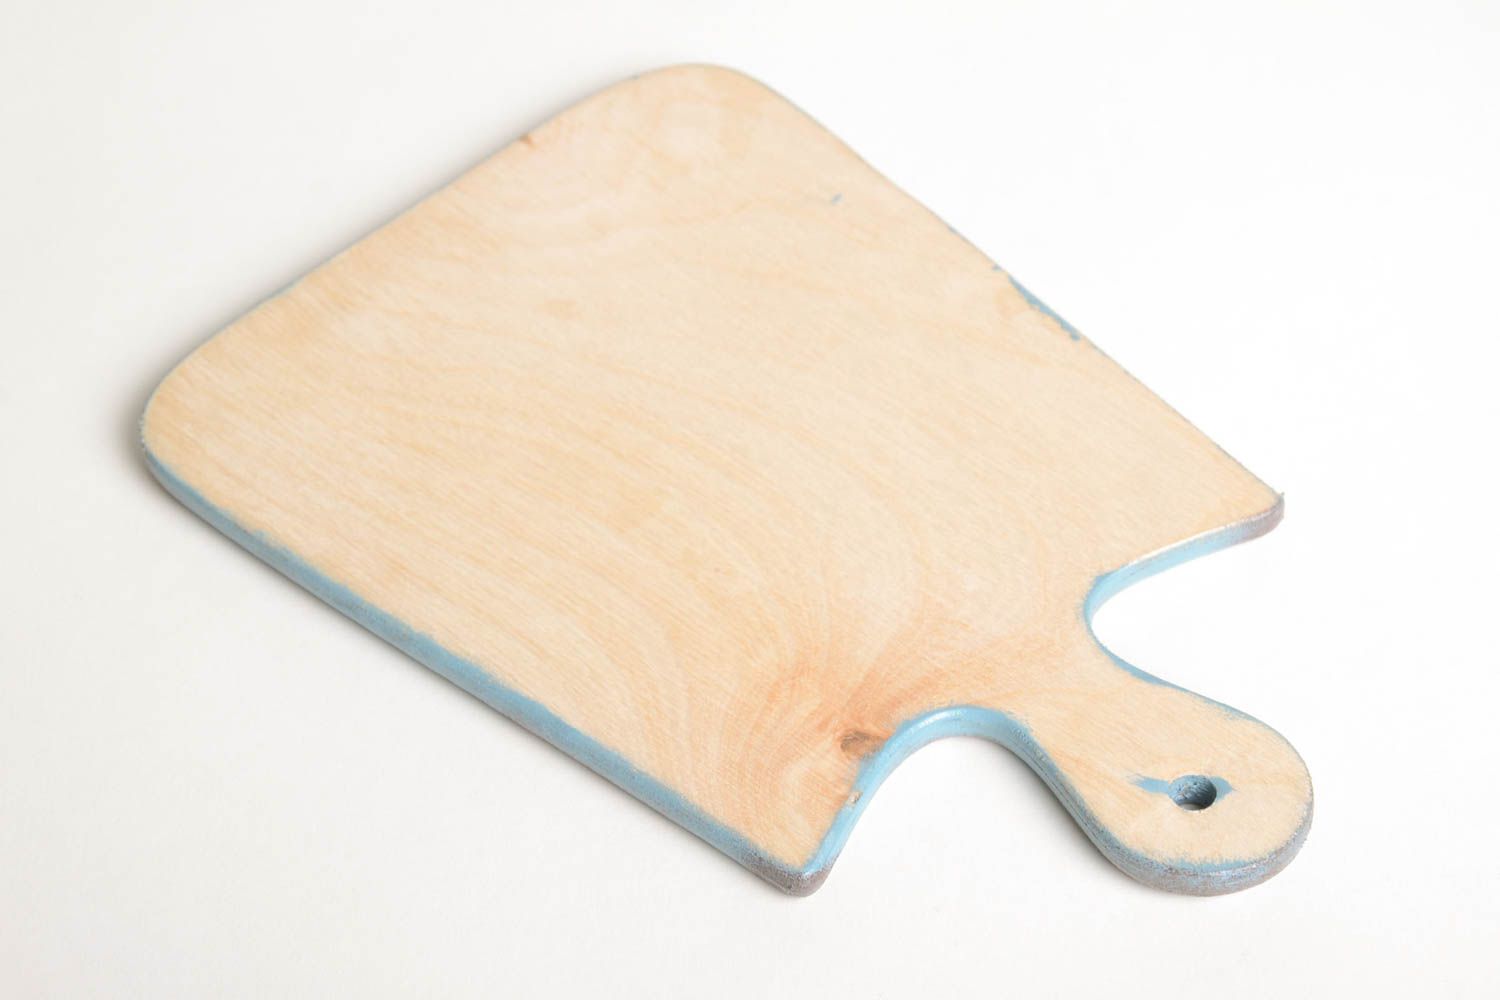 Unusual handmade wooden chopping board decoupage ideas home goods gift ideas photo 4